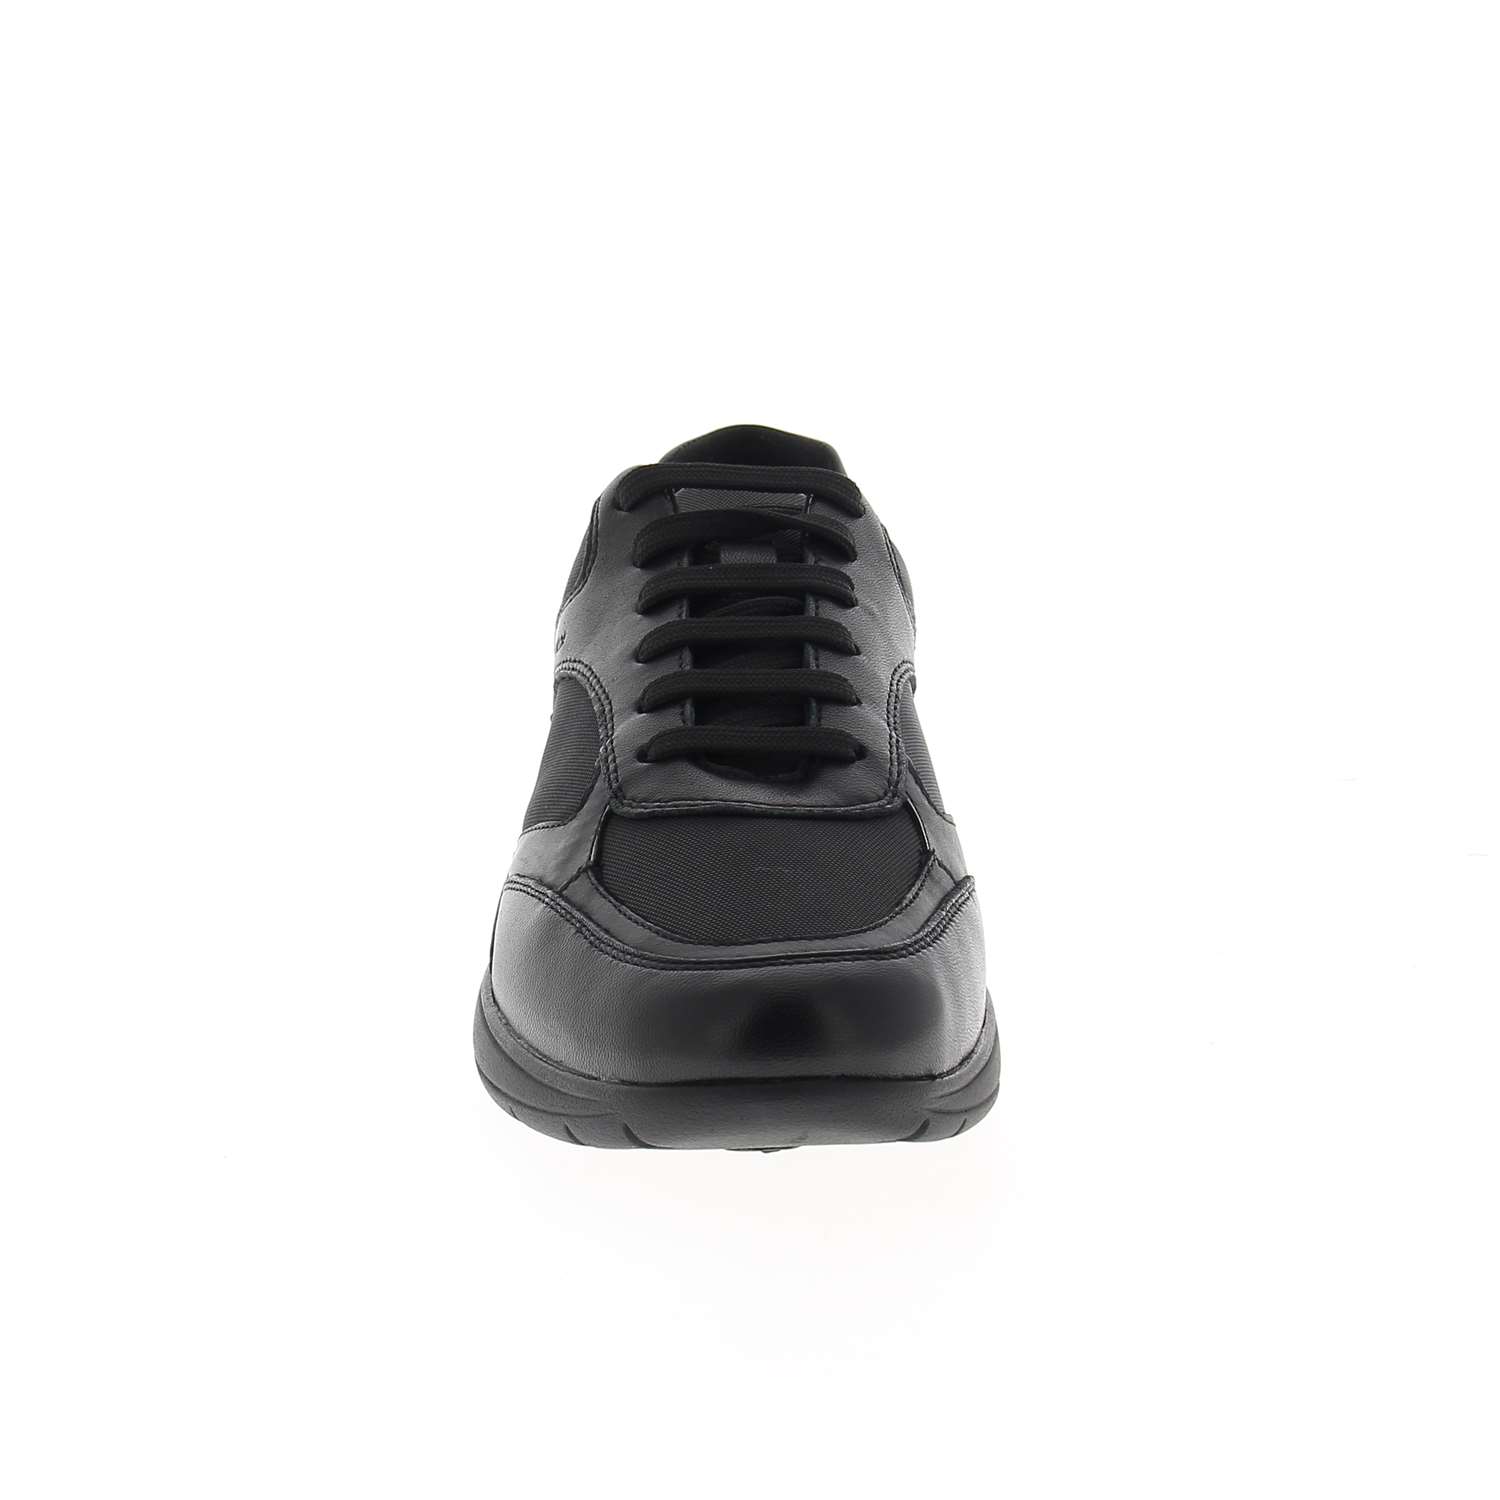 03 - SPHERICA EC2 - GEOX - Chaussures à lacets - Cuir